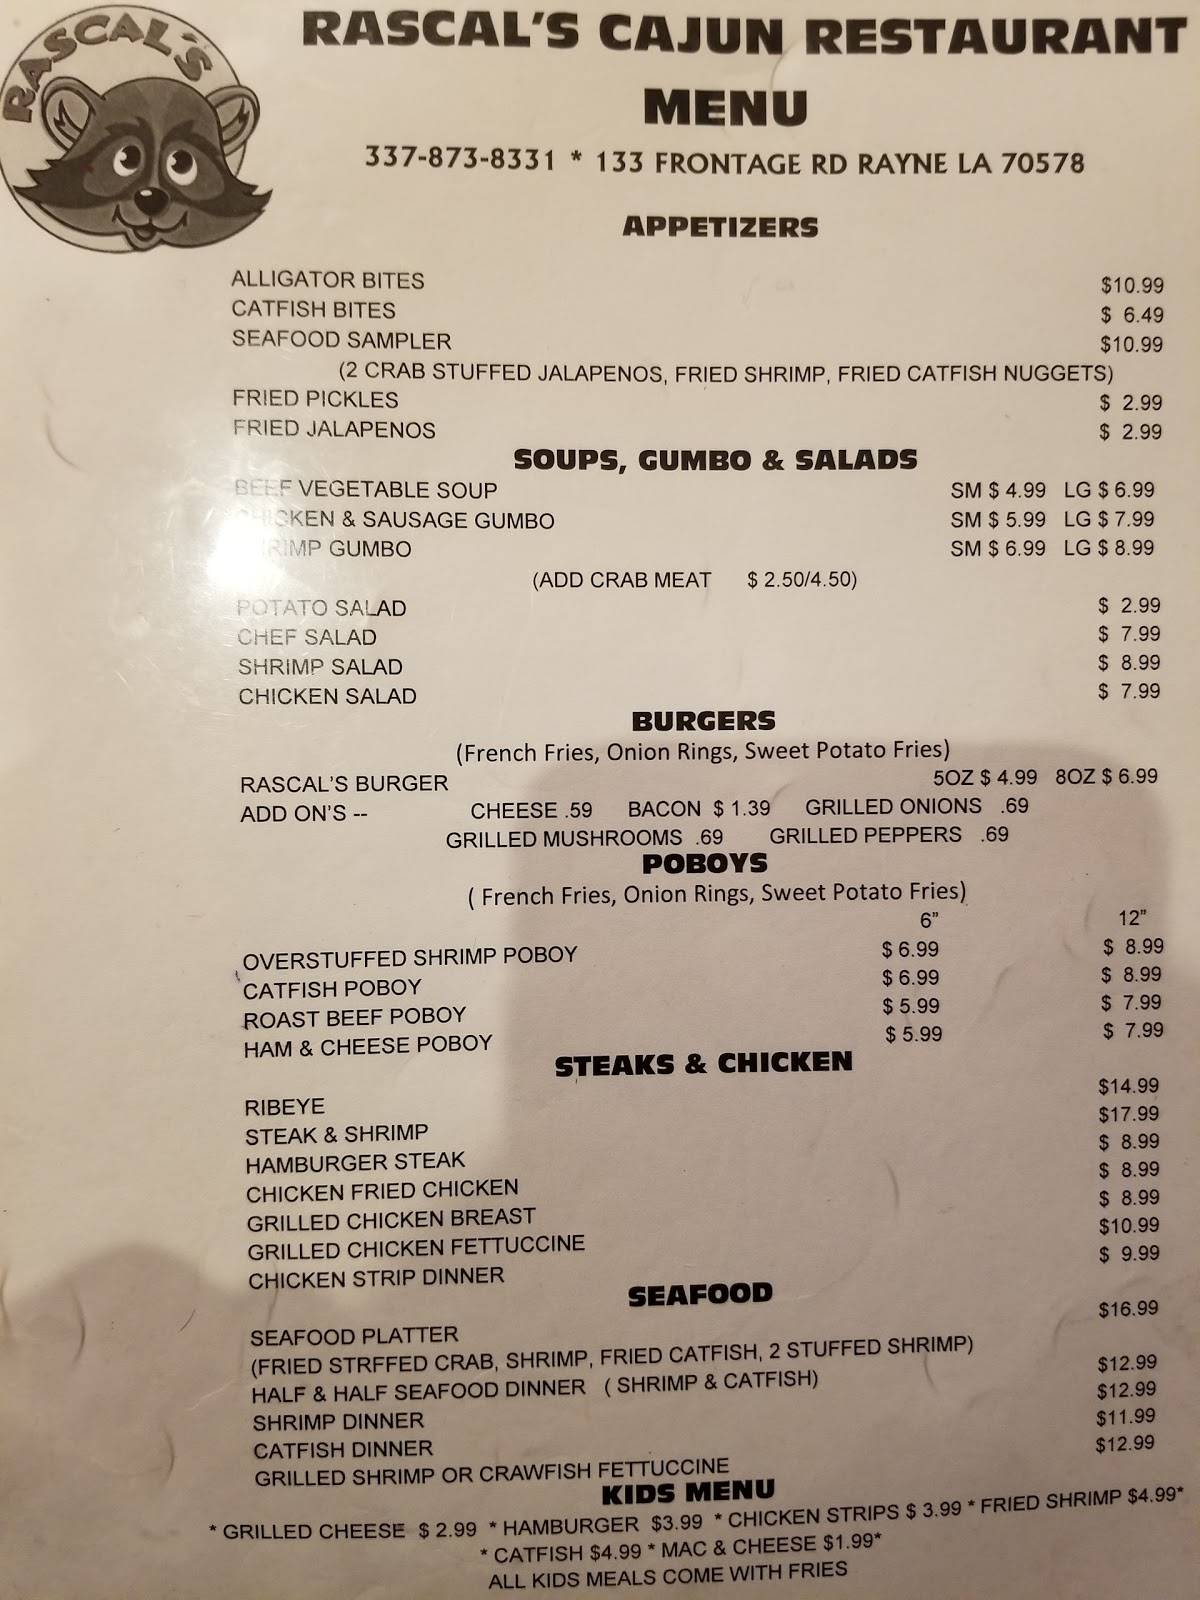 Rascal's Cajun Restaurant menu